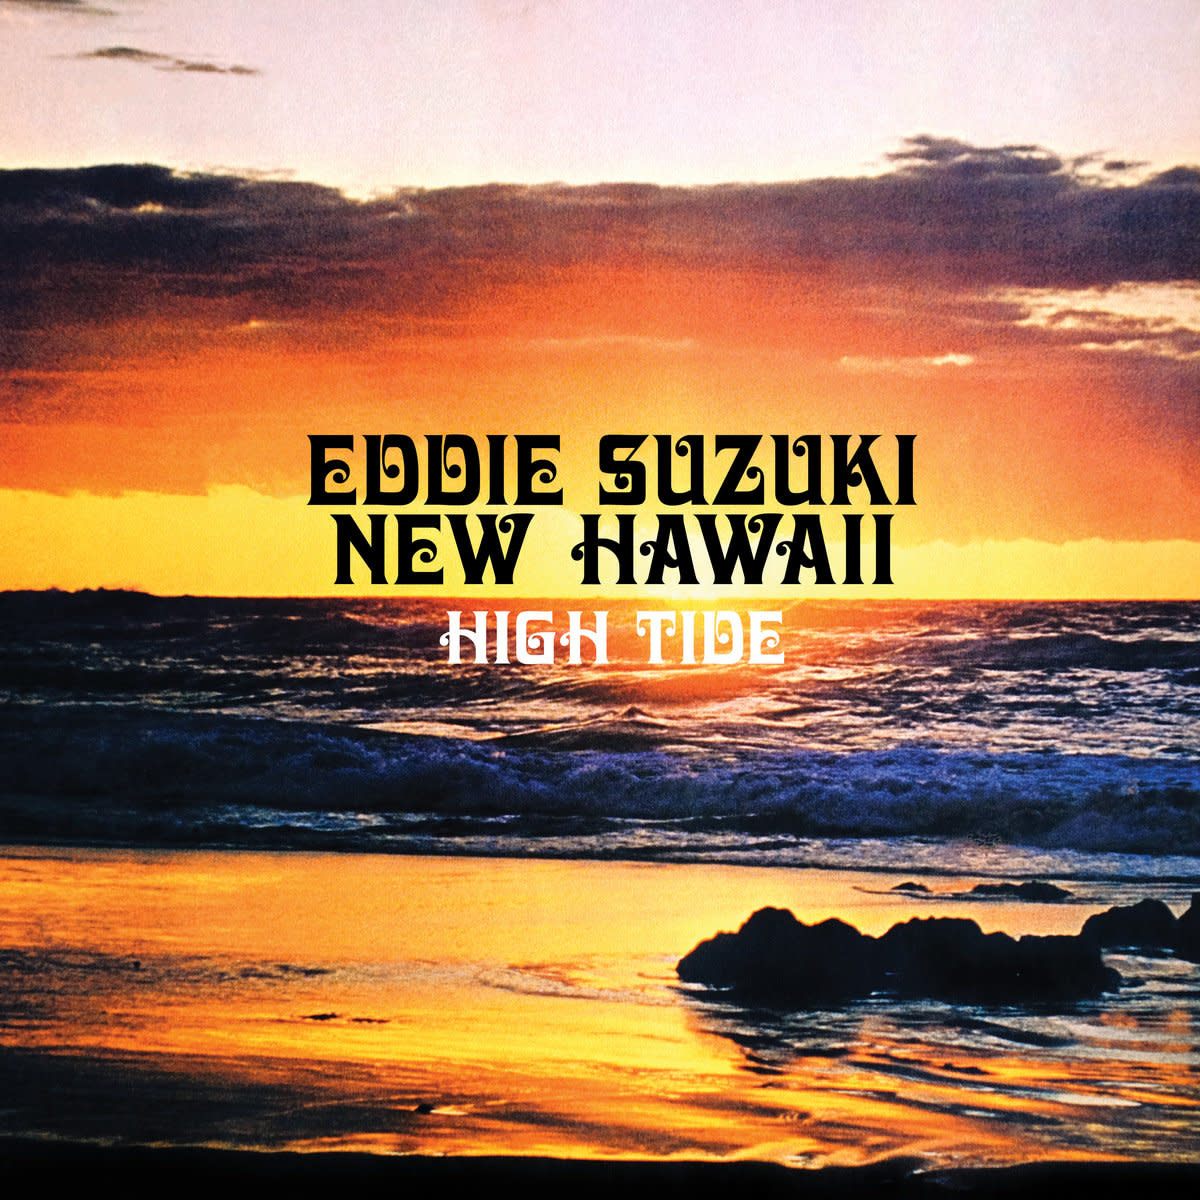 Aloha Got Soul Eddie Suzuki - High Tide